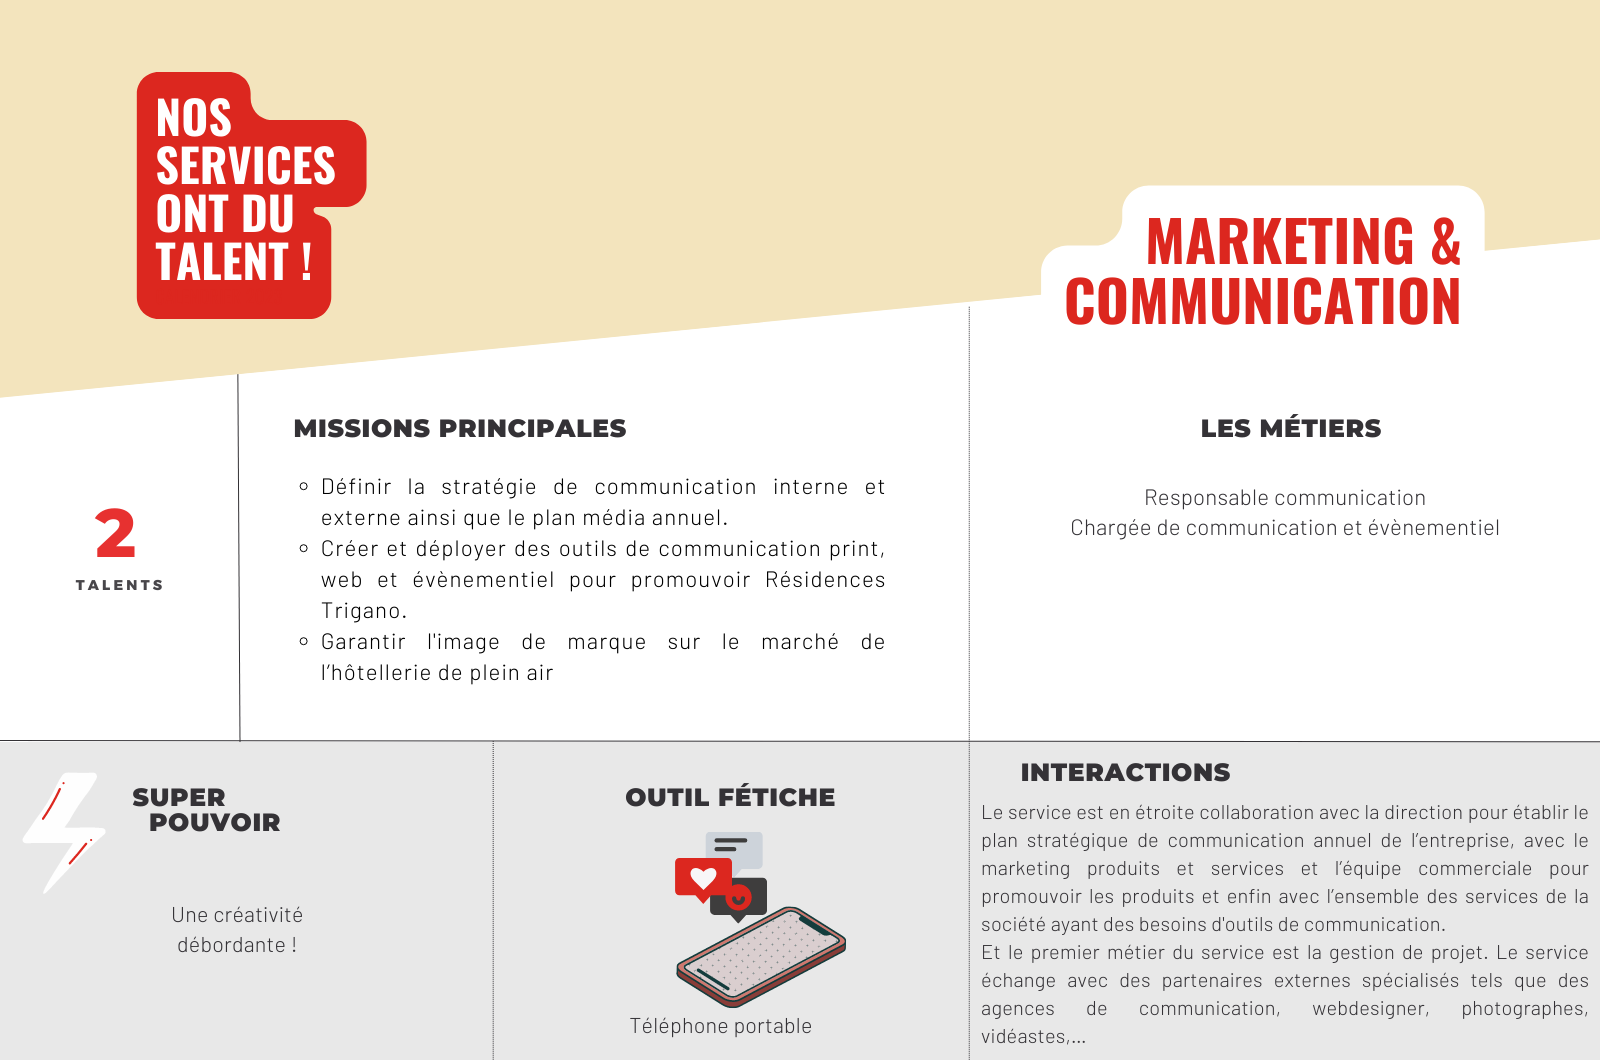 Marketing & communication